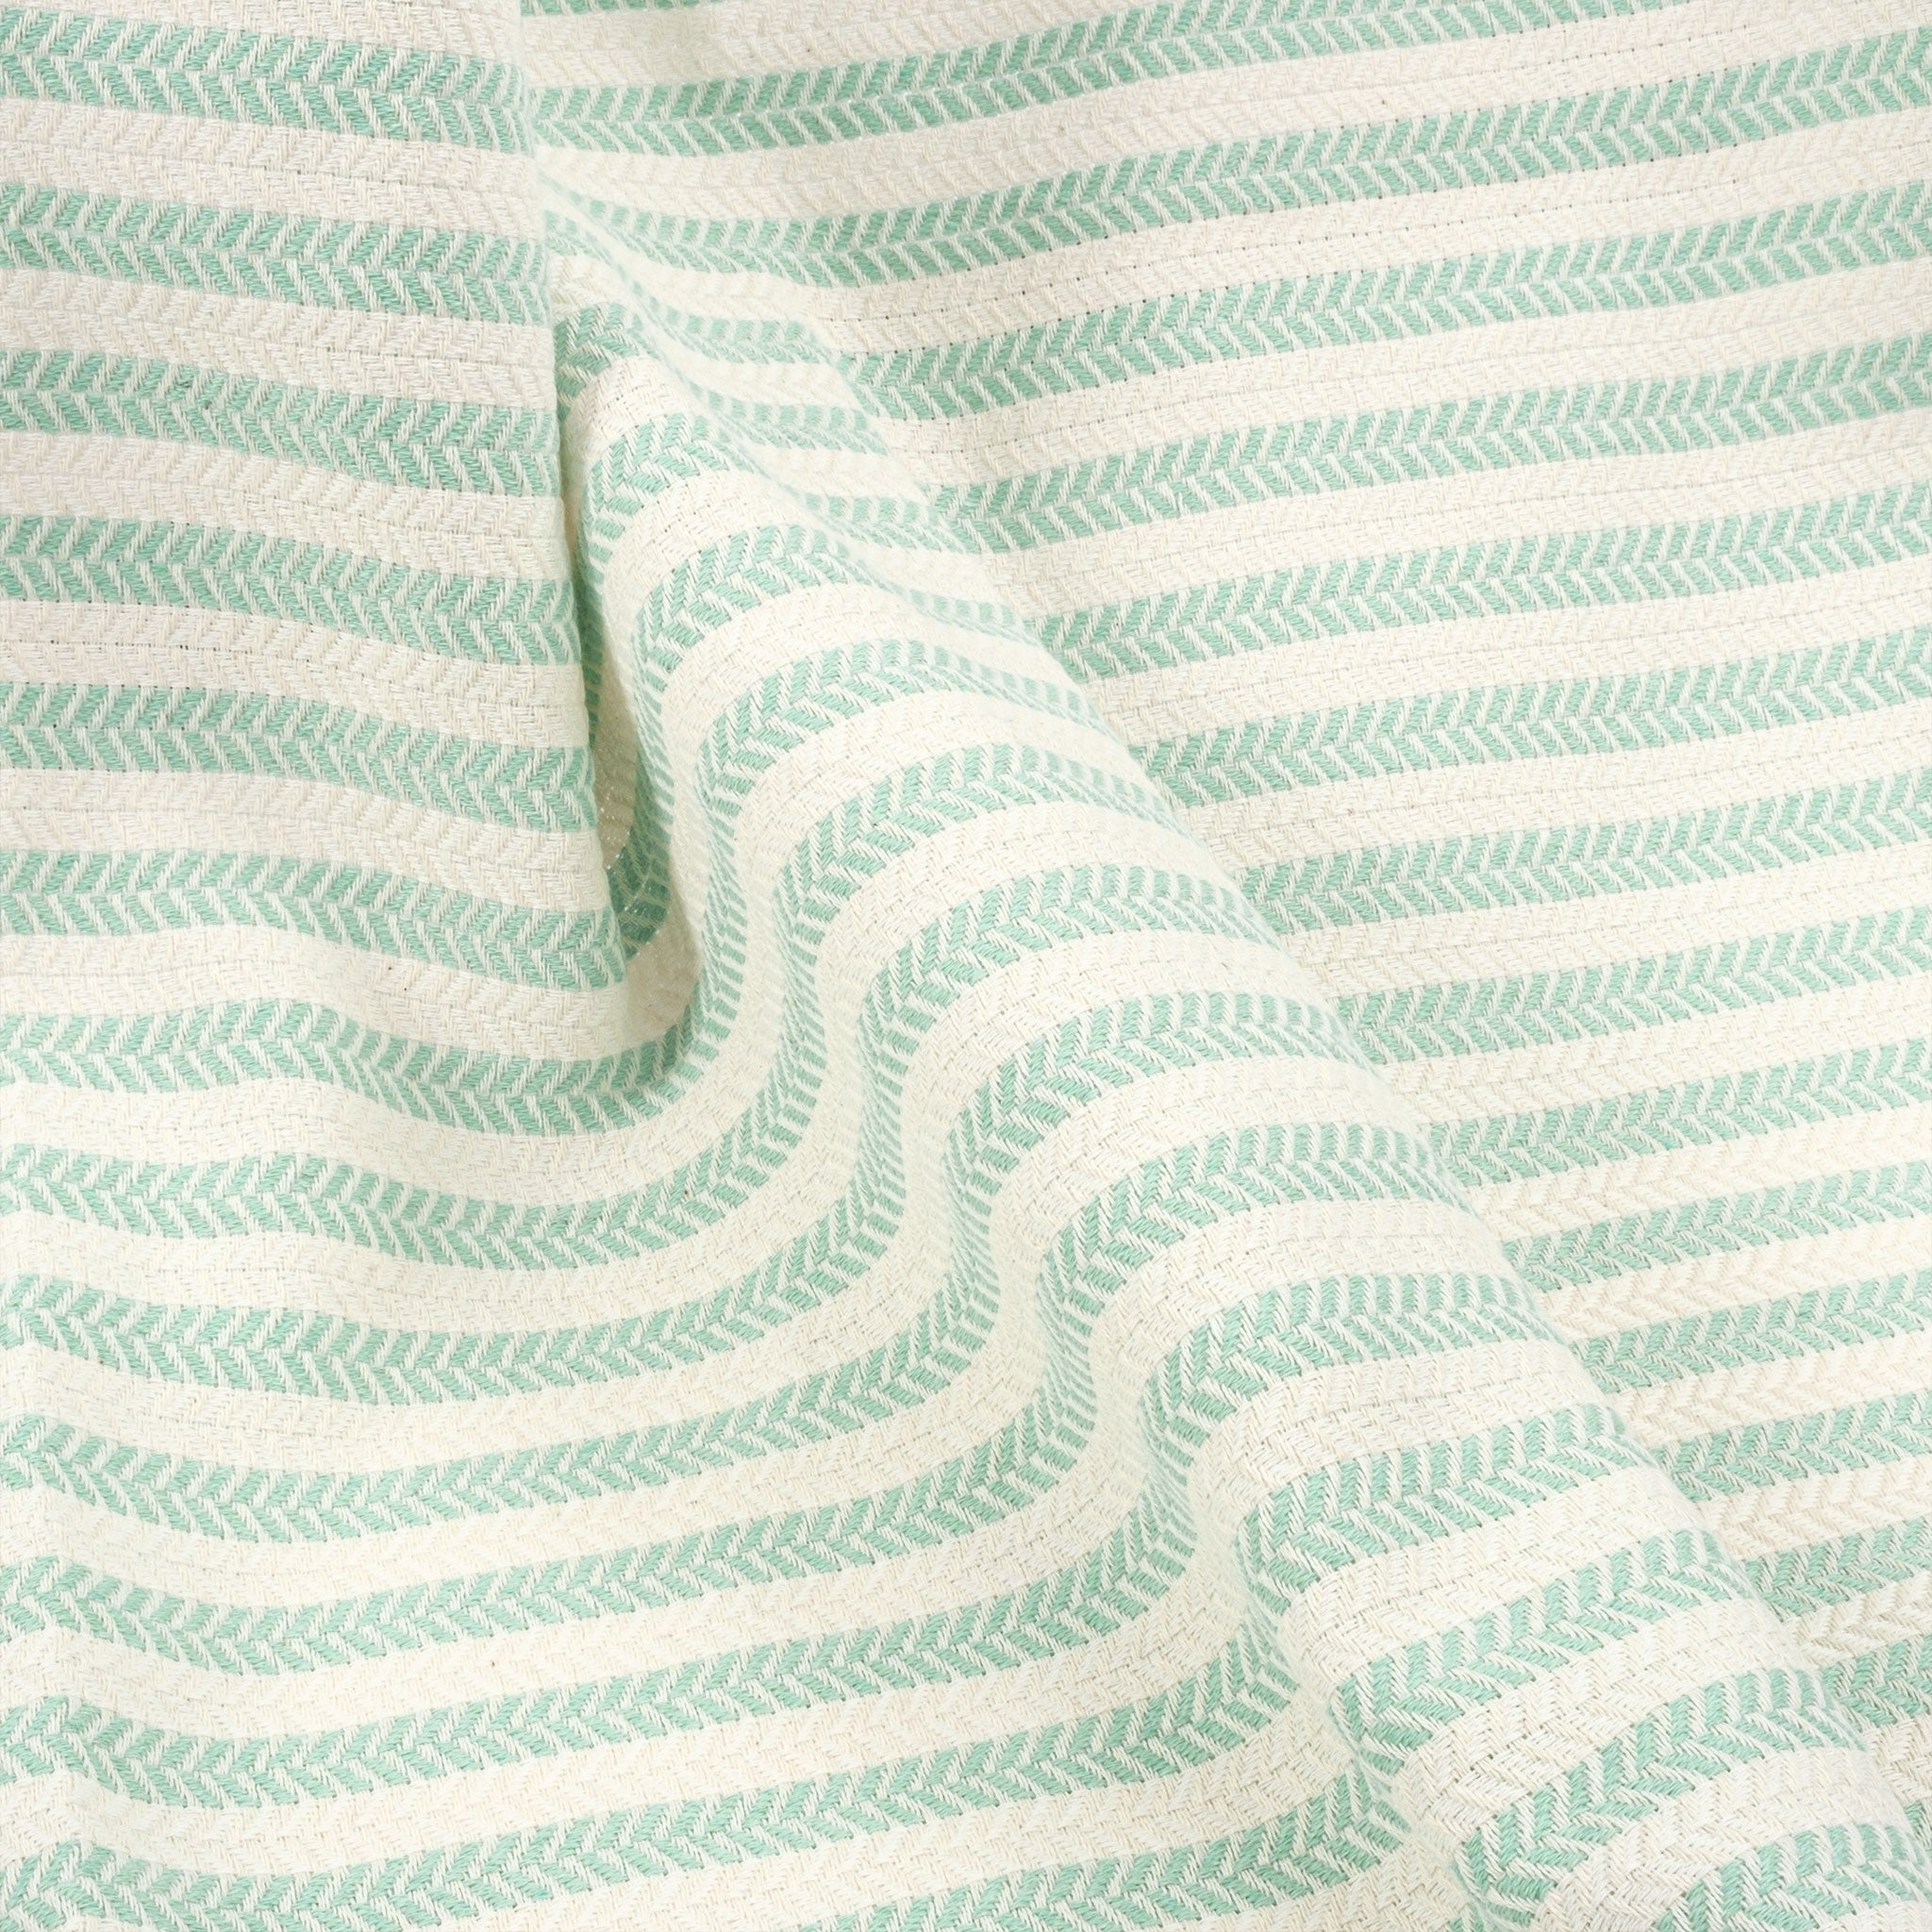 American Soft Linen - 100% Cotton Turkish Peshtemal Towels 40x70 Inches - Sage - 2